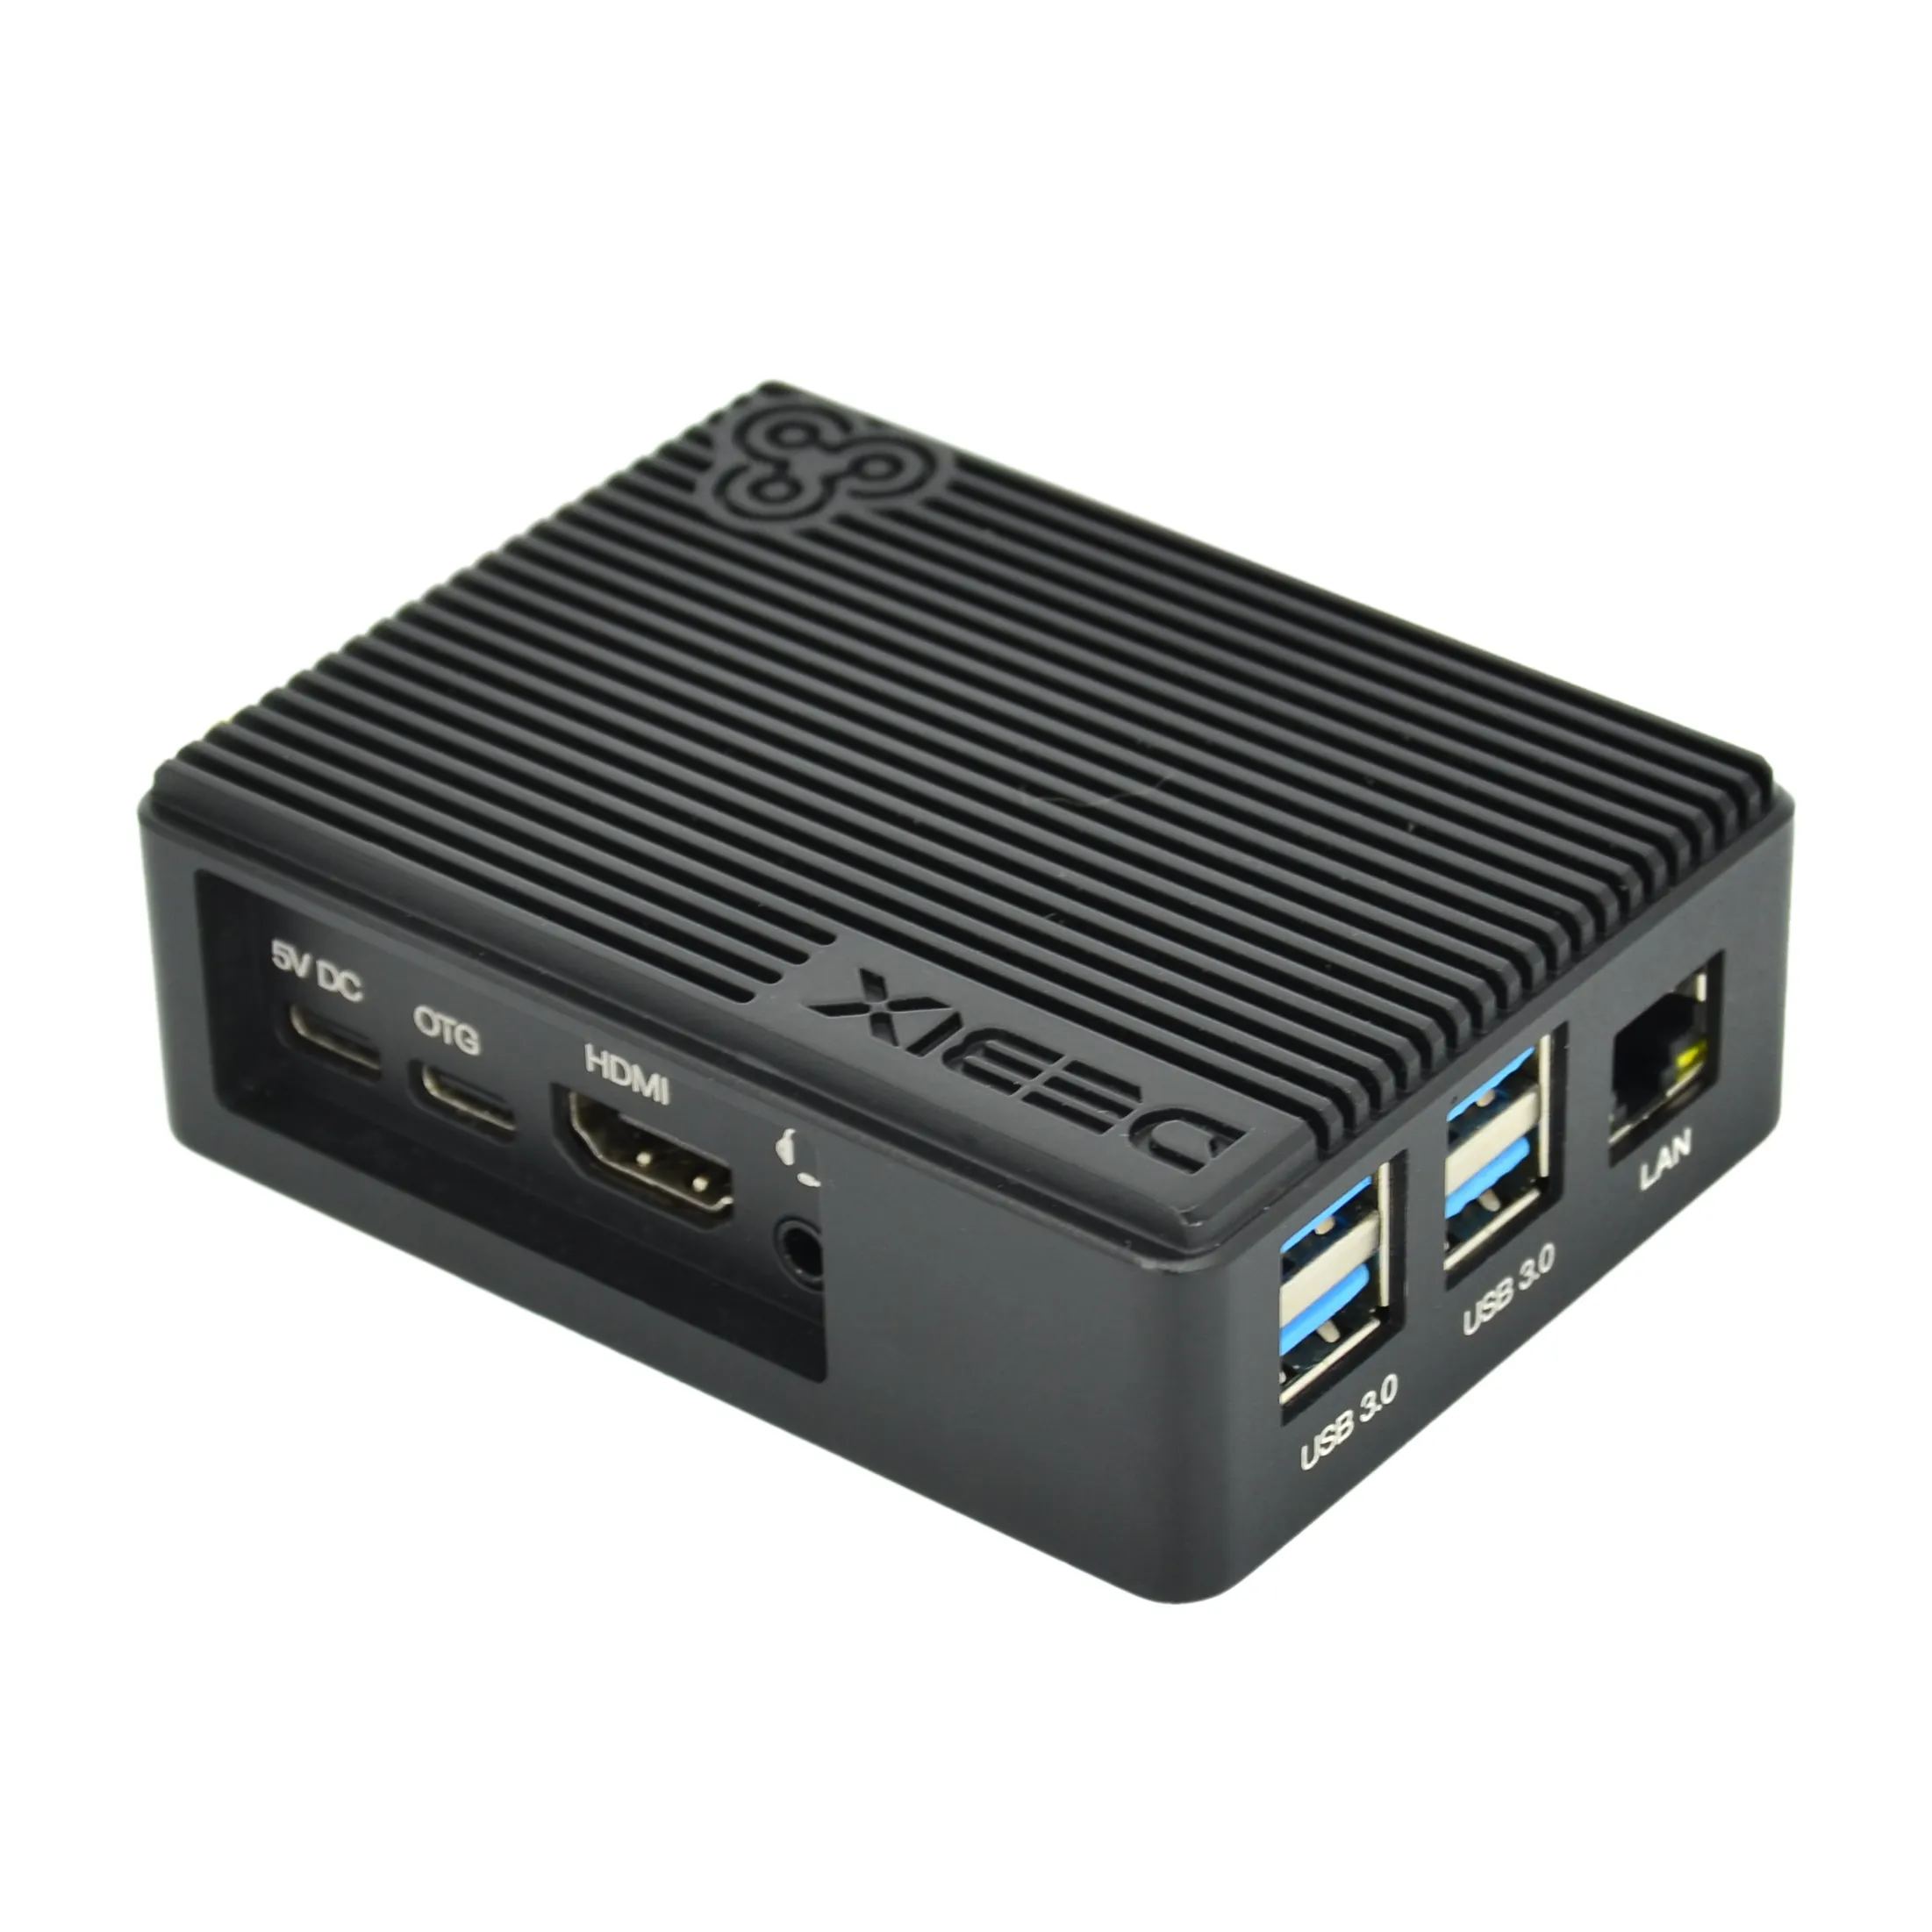 OEM mini pcs imx8m plus box pc 2RAM 16eMMC sample rts for industry 4.0, IoTs, smart citie, multimedia using military pc laptop